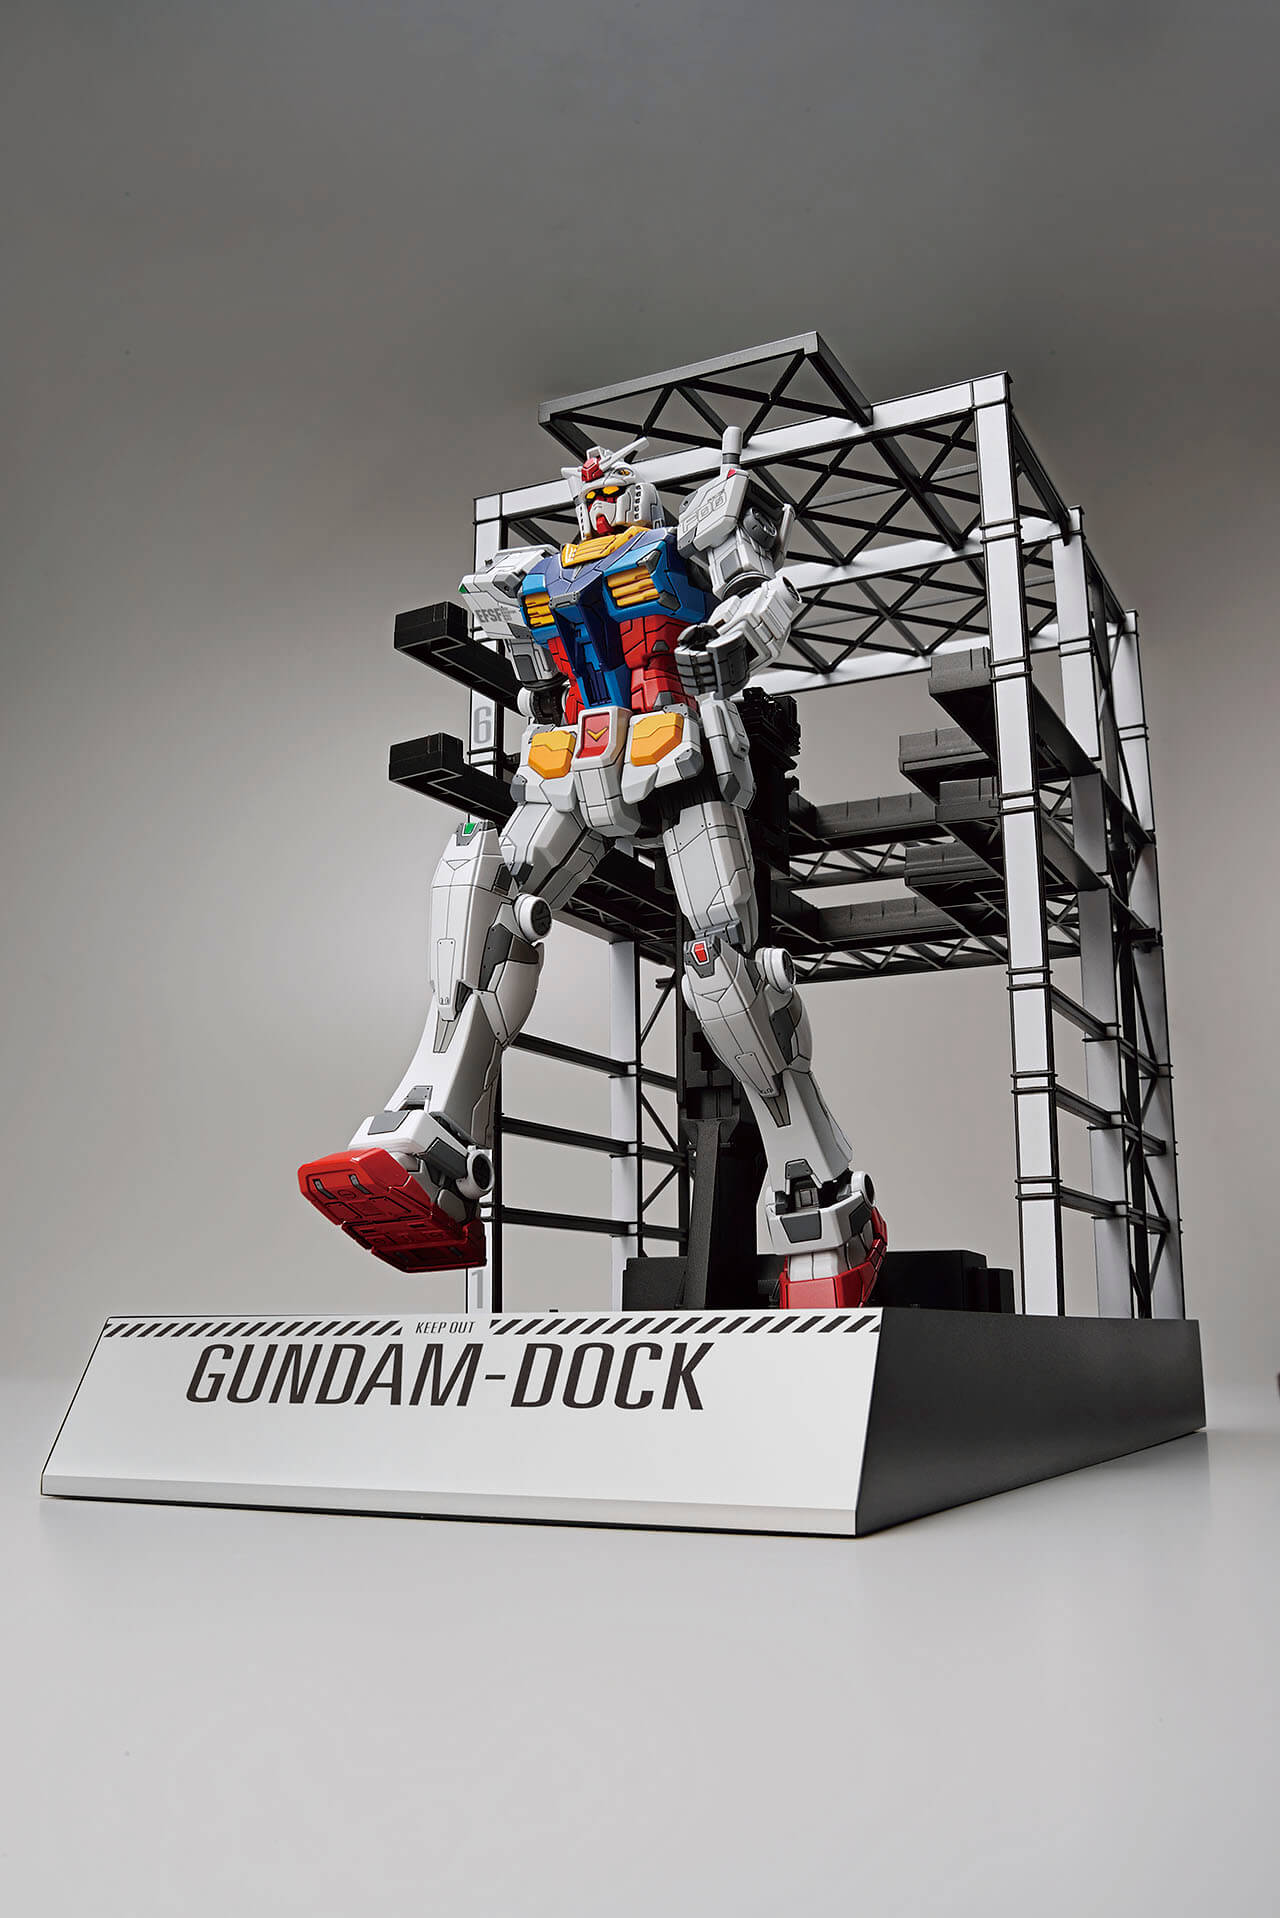 Gundam Gunpla Yokohama Limited Set of 2 RX-78F00 1/100 & 1/144 Plastic model 